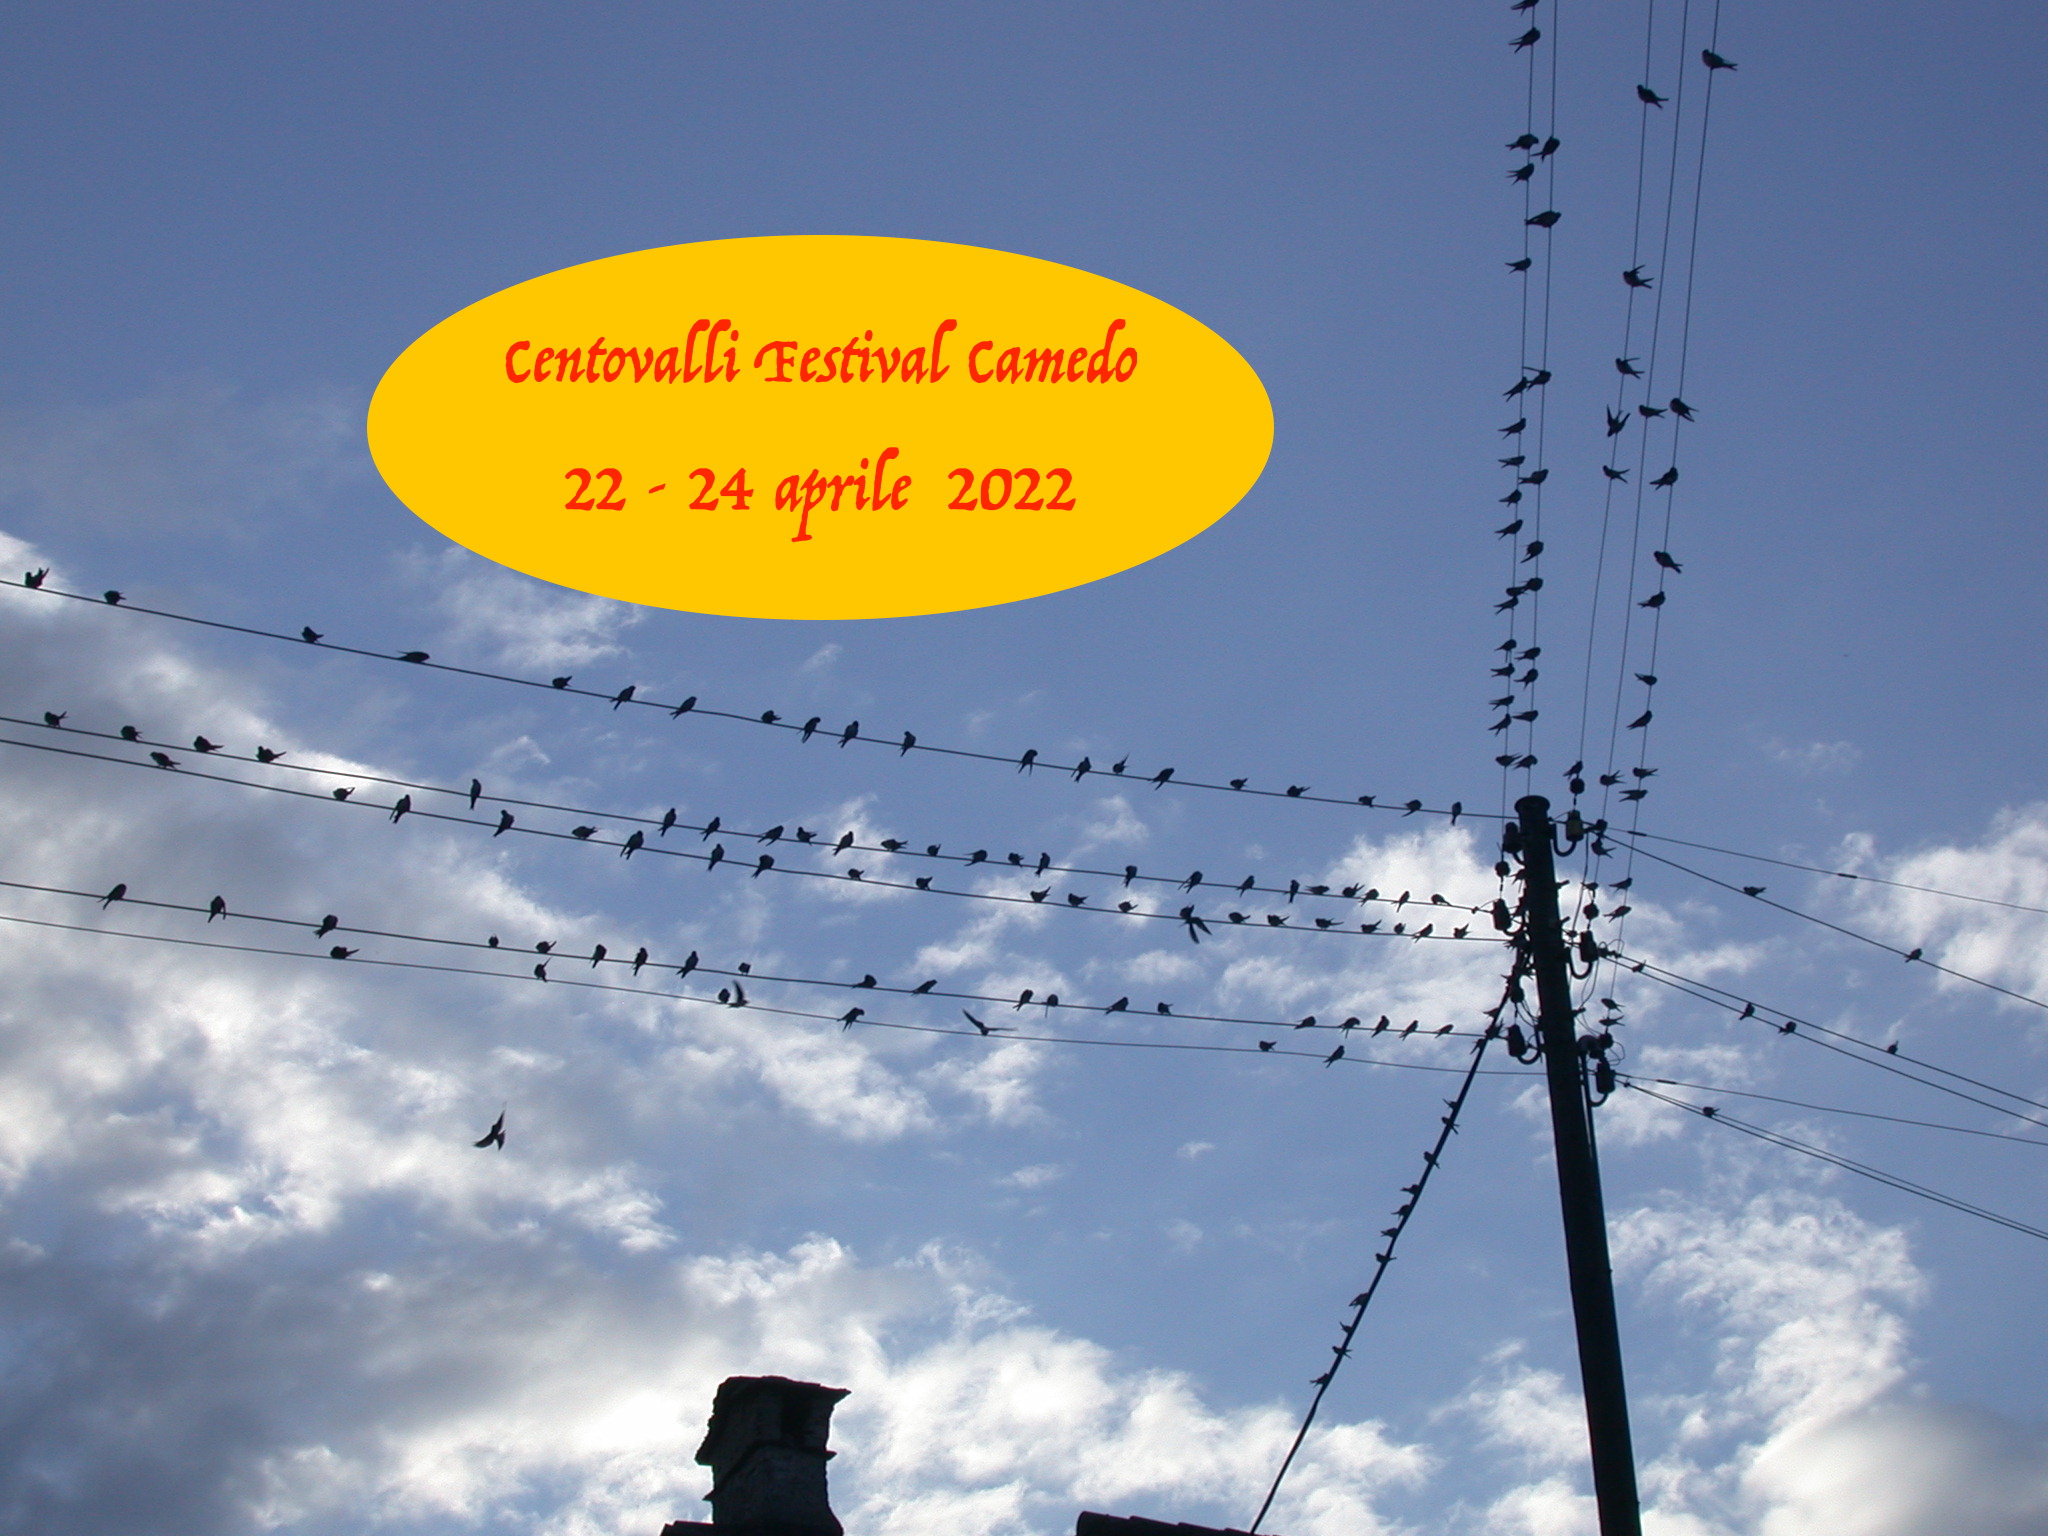 Centovalli Festival Camedo 2022 Program